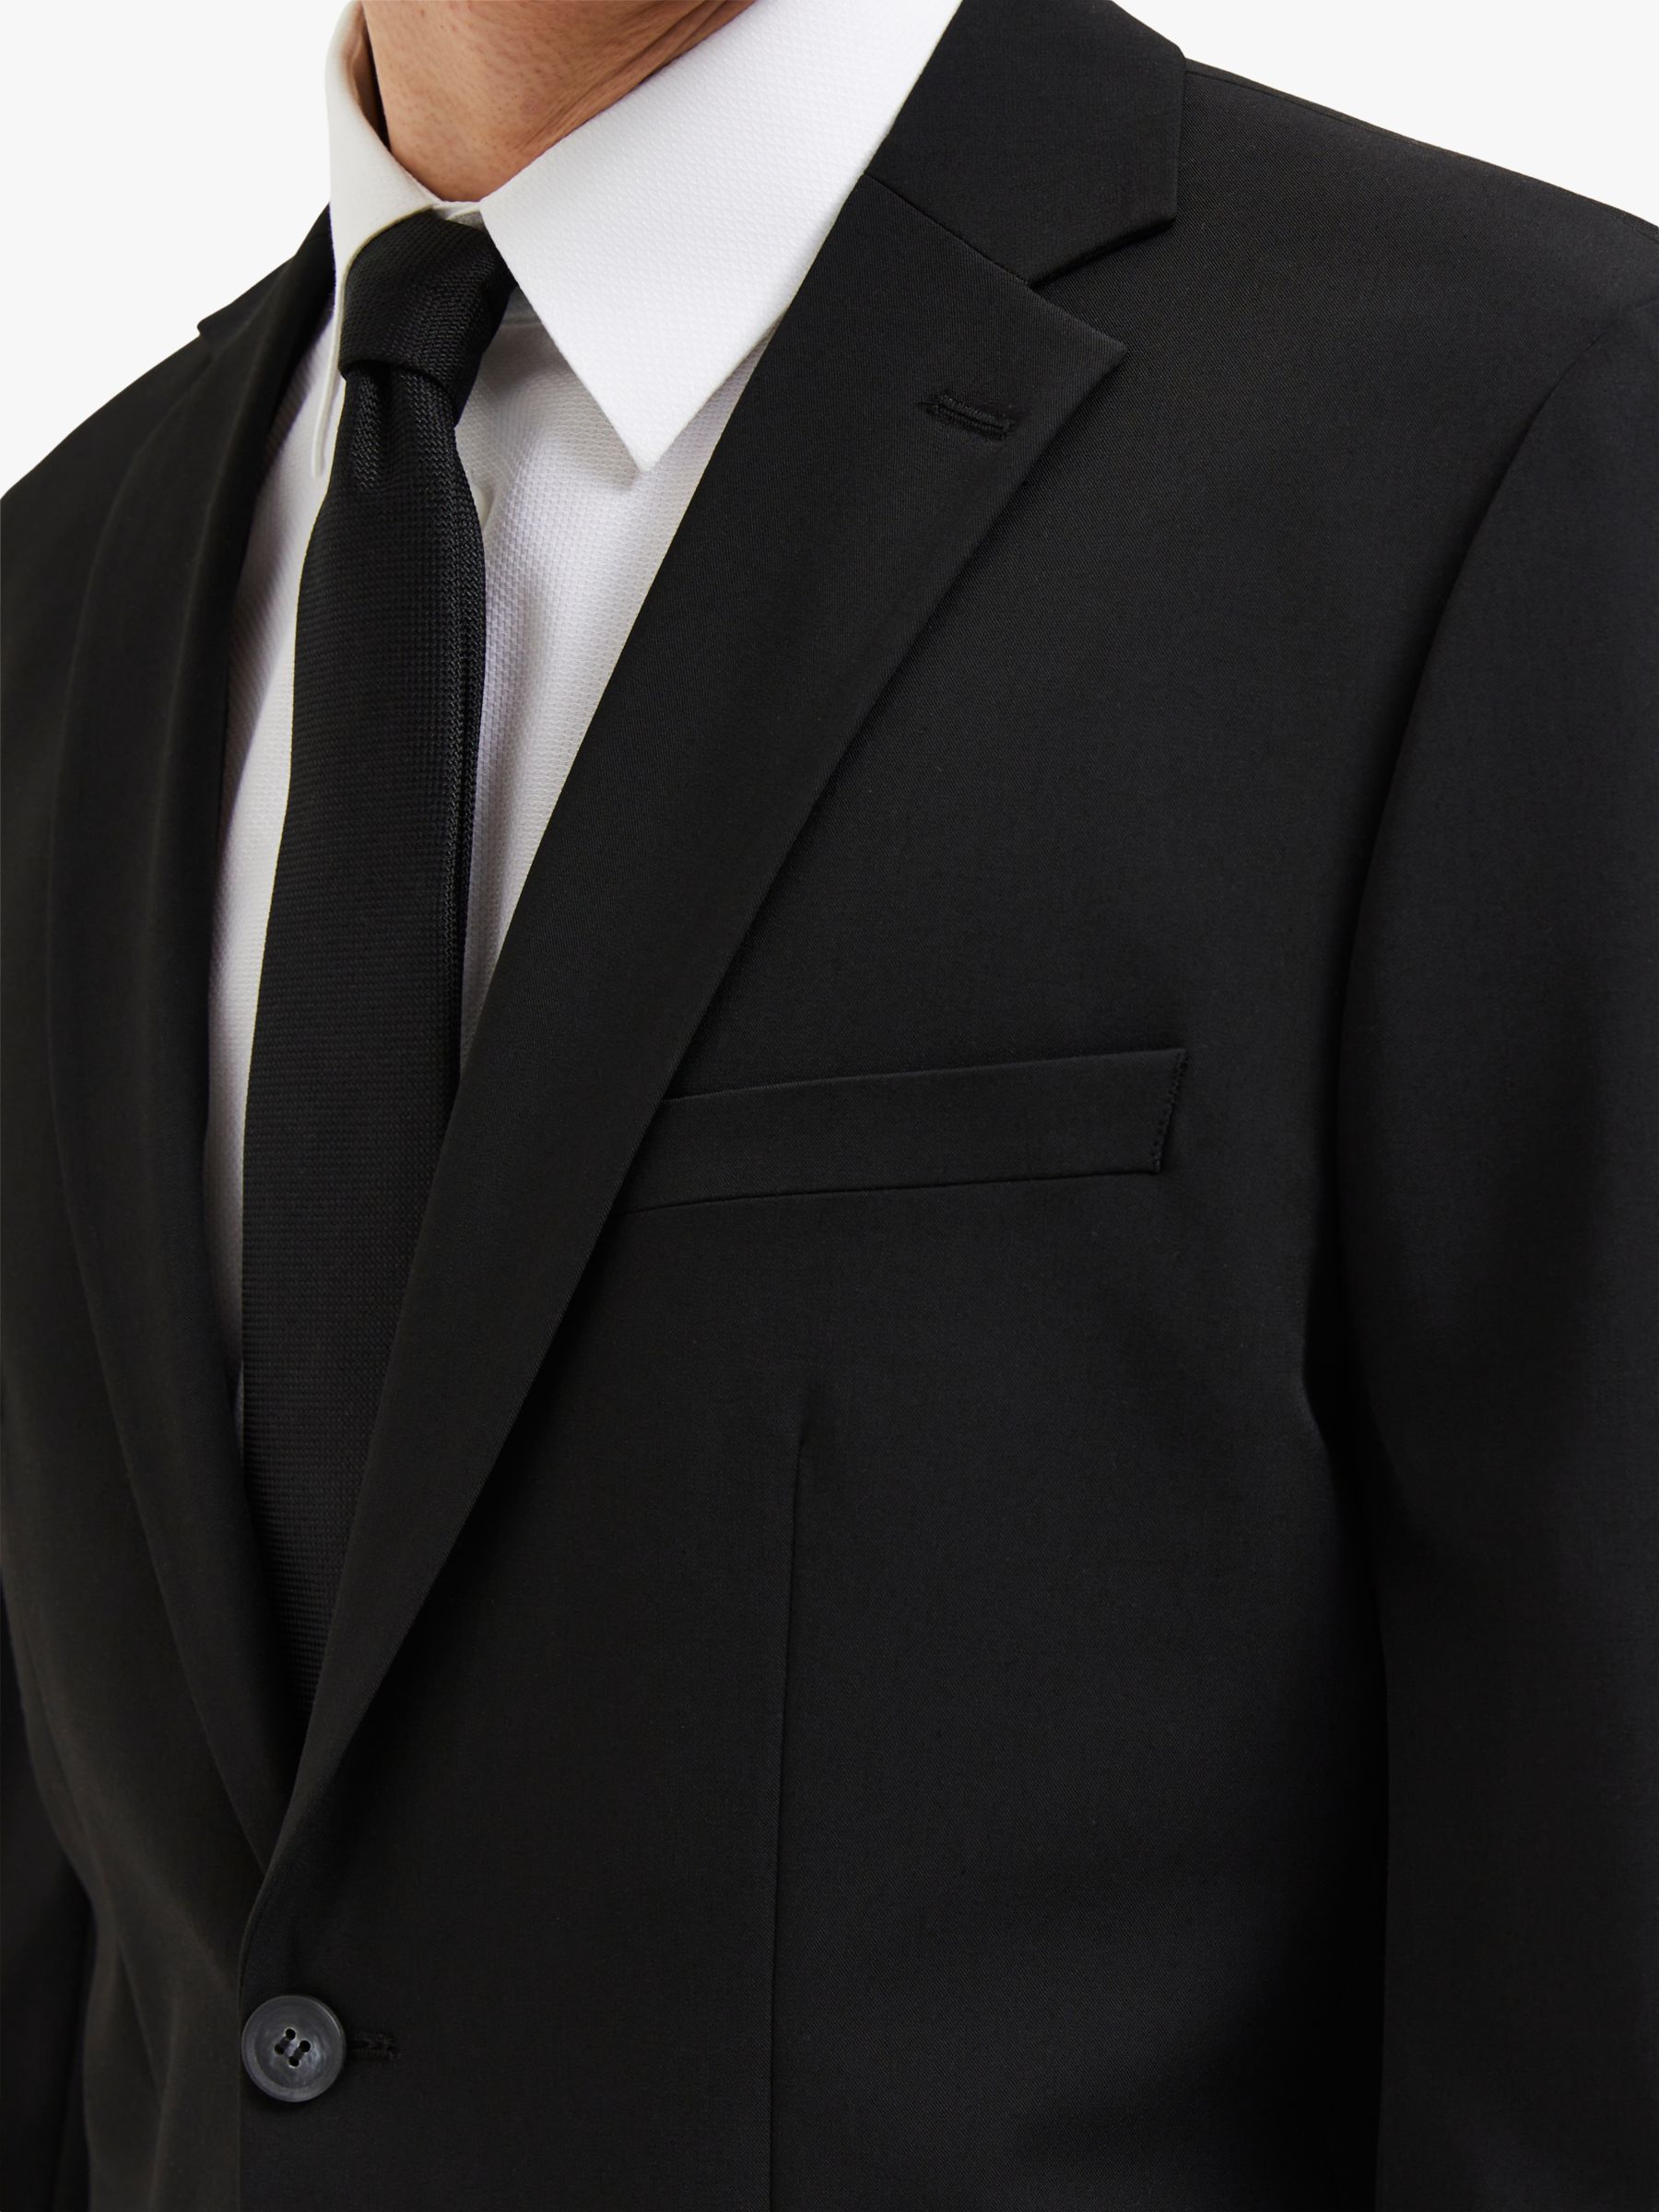 SELECTED HOMME Slim Fit Suit Jacket, Black at John Lewis & Partners